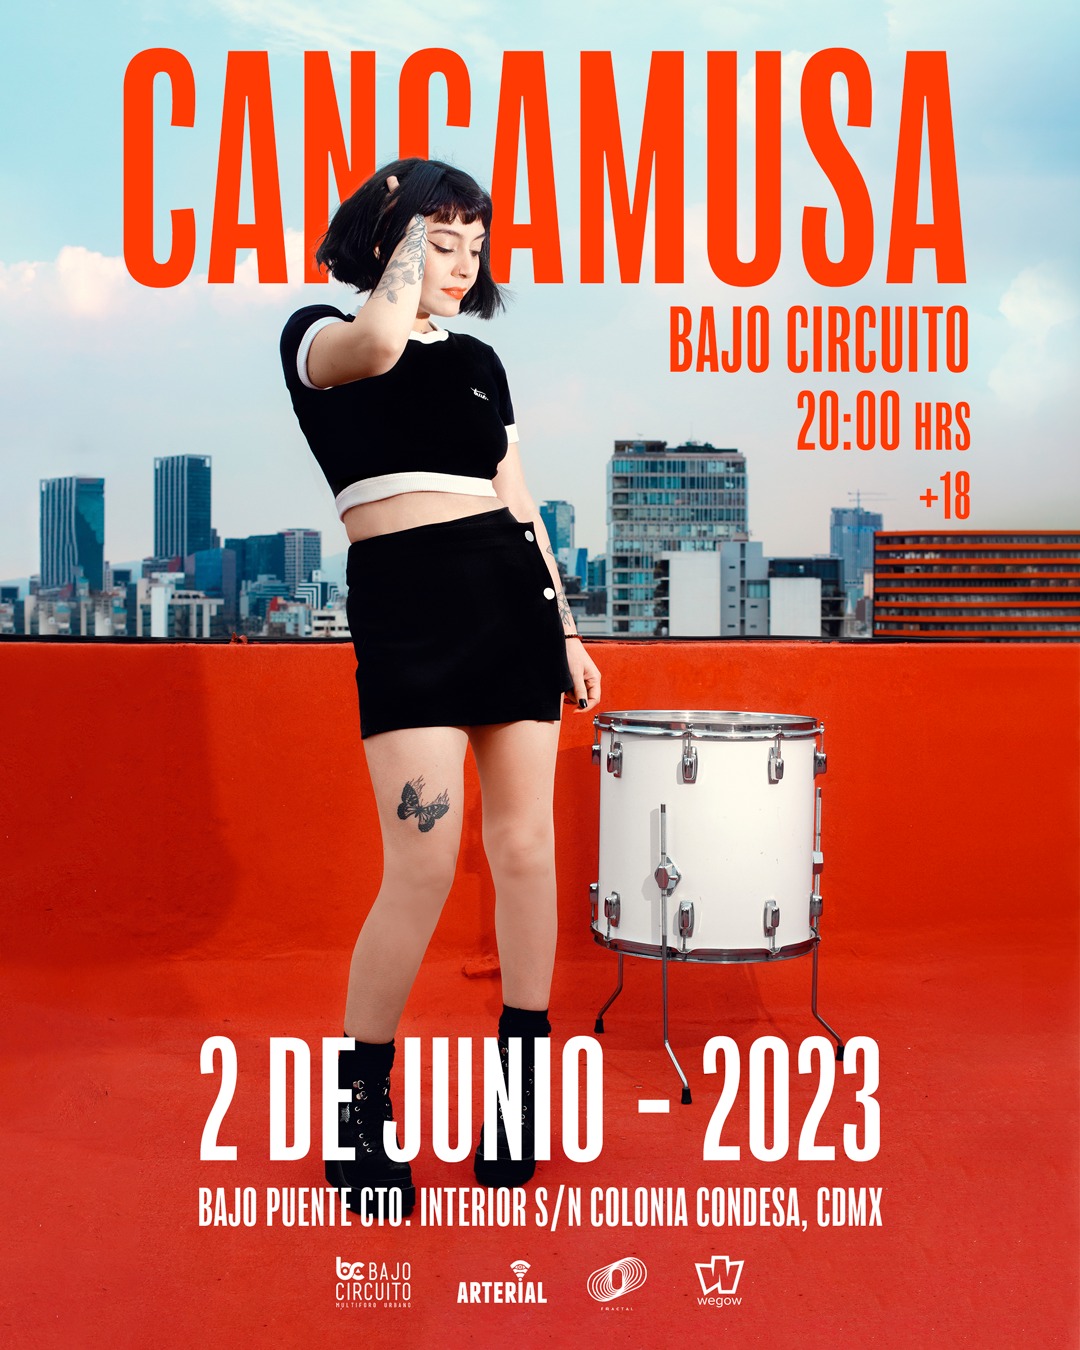 Cancamusa_Bajo Circuito